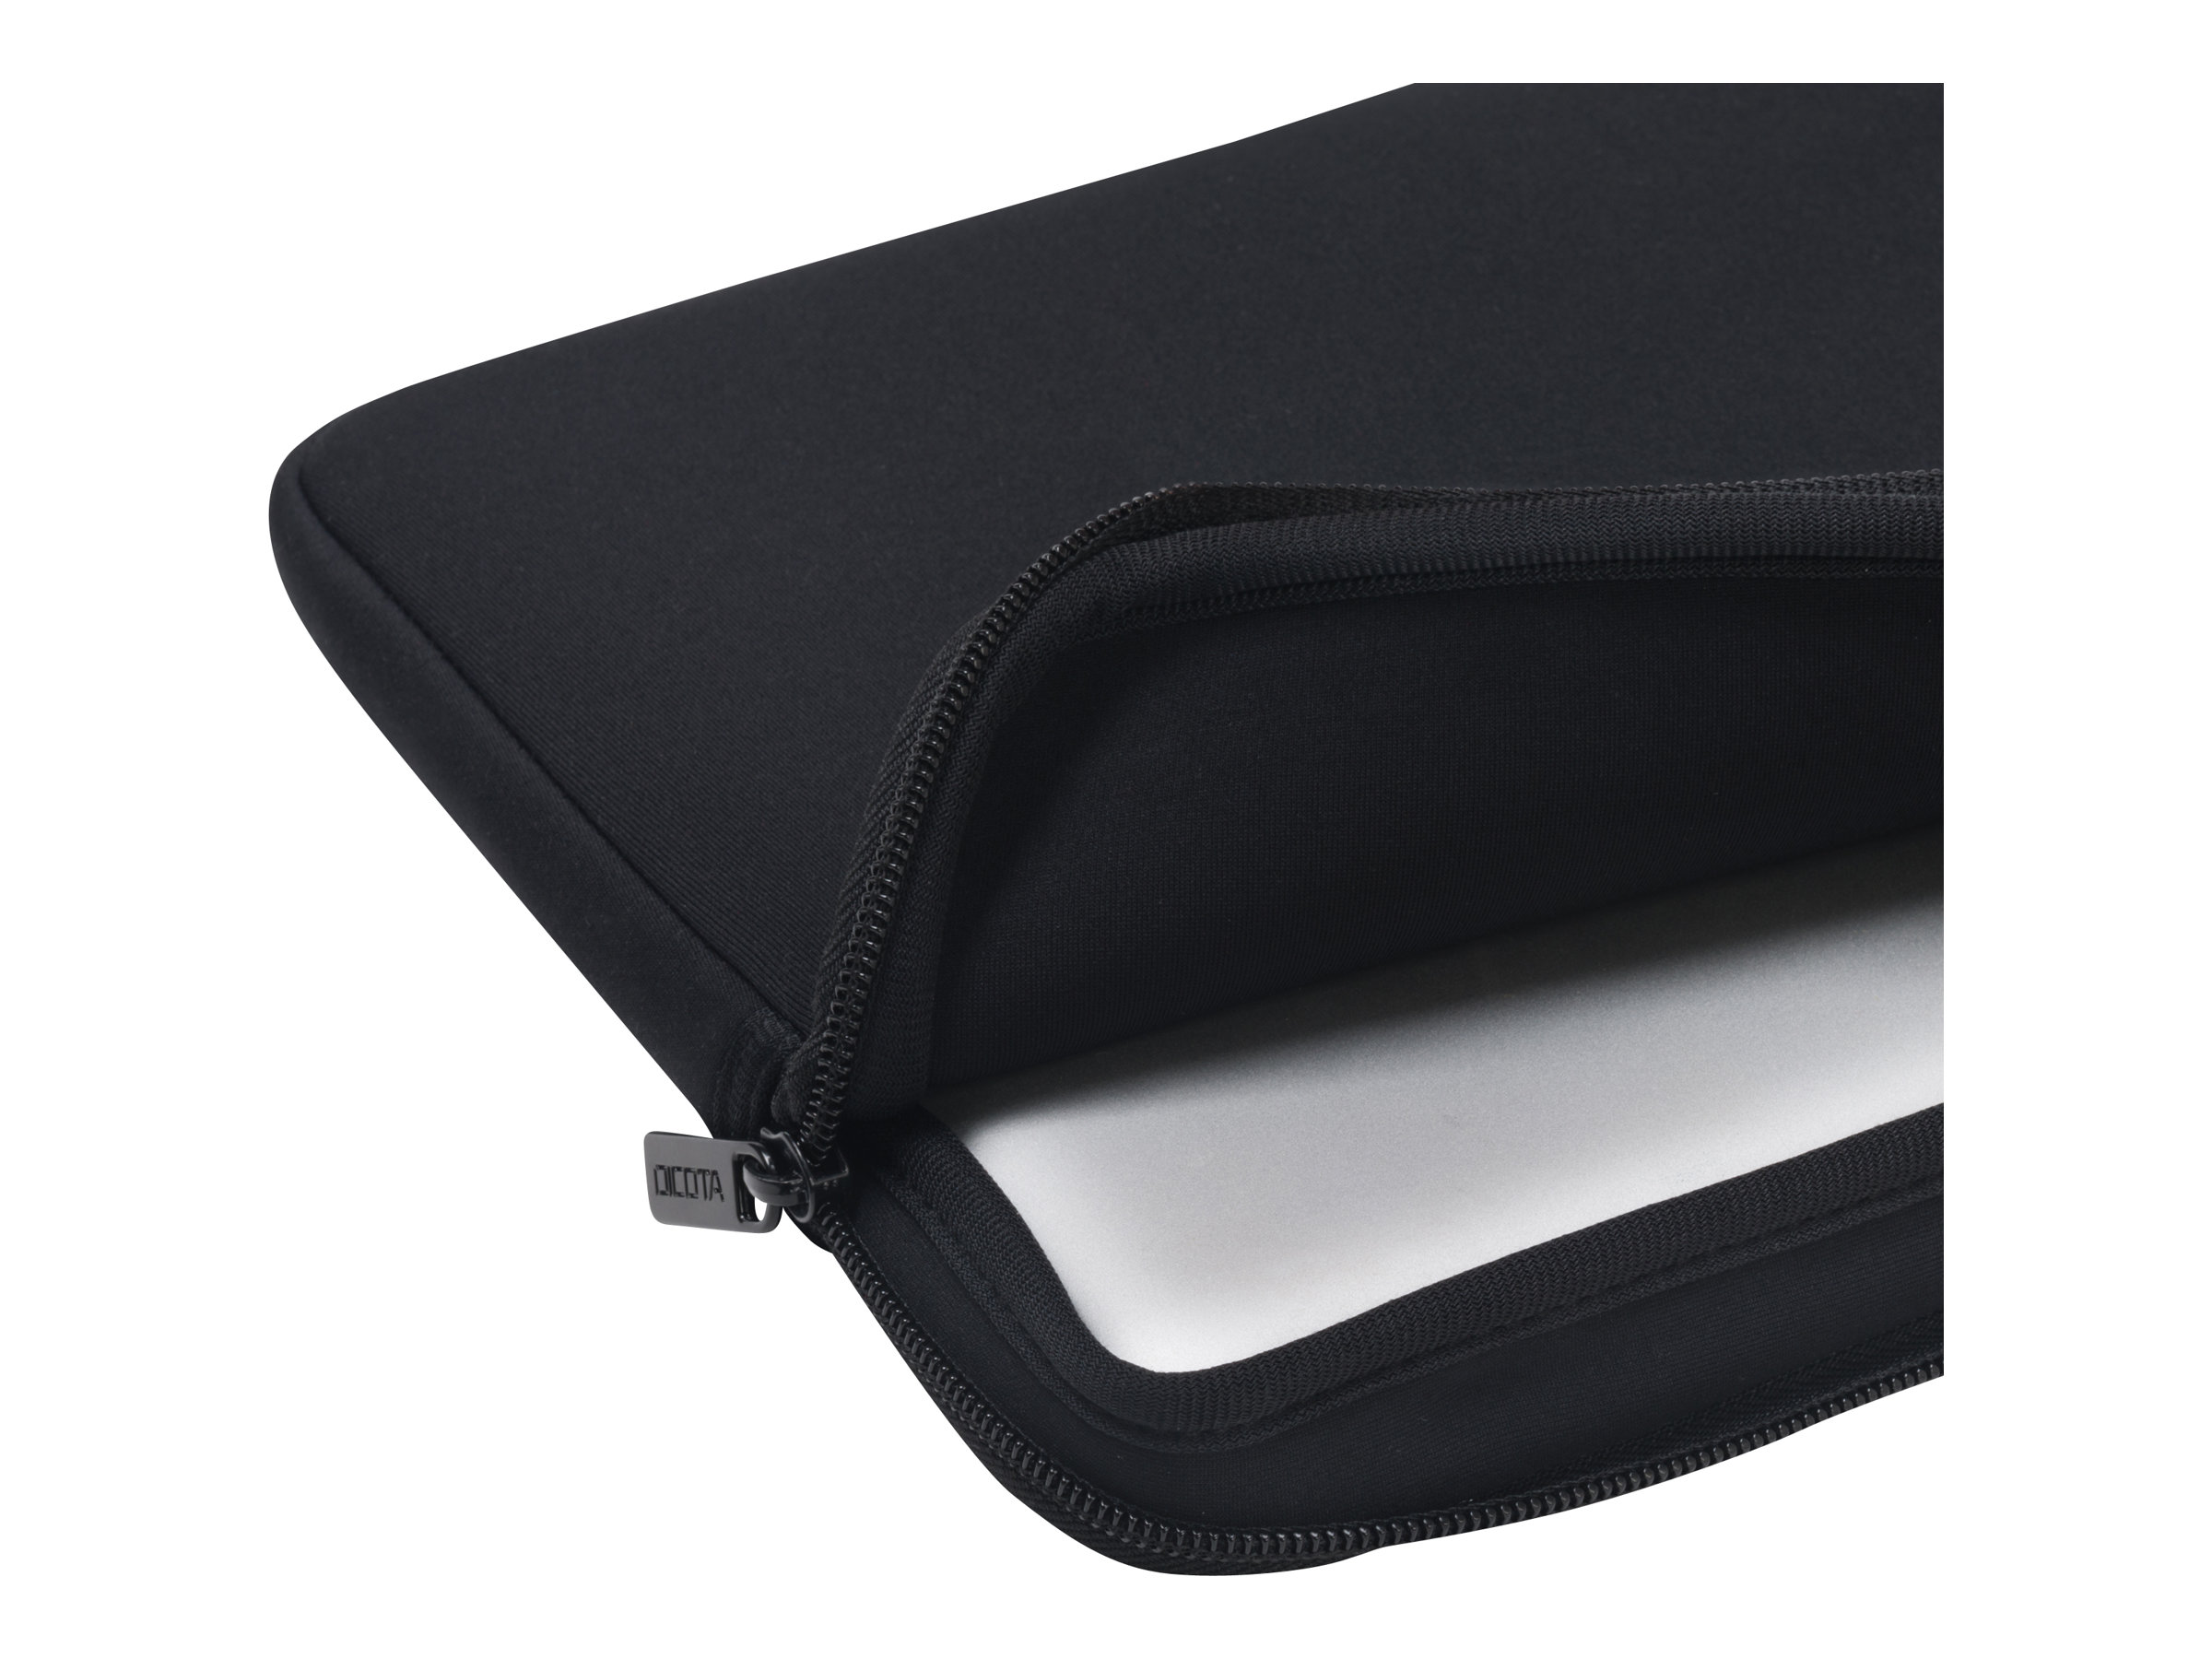 Dicota PerfectSkin Laptop Sleeve 13.3" - Notebook-Hülle - 33.8 cm (13.3")